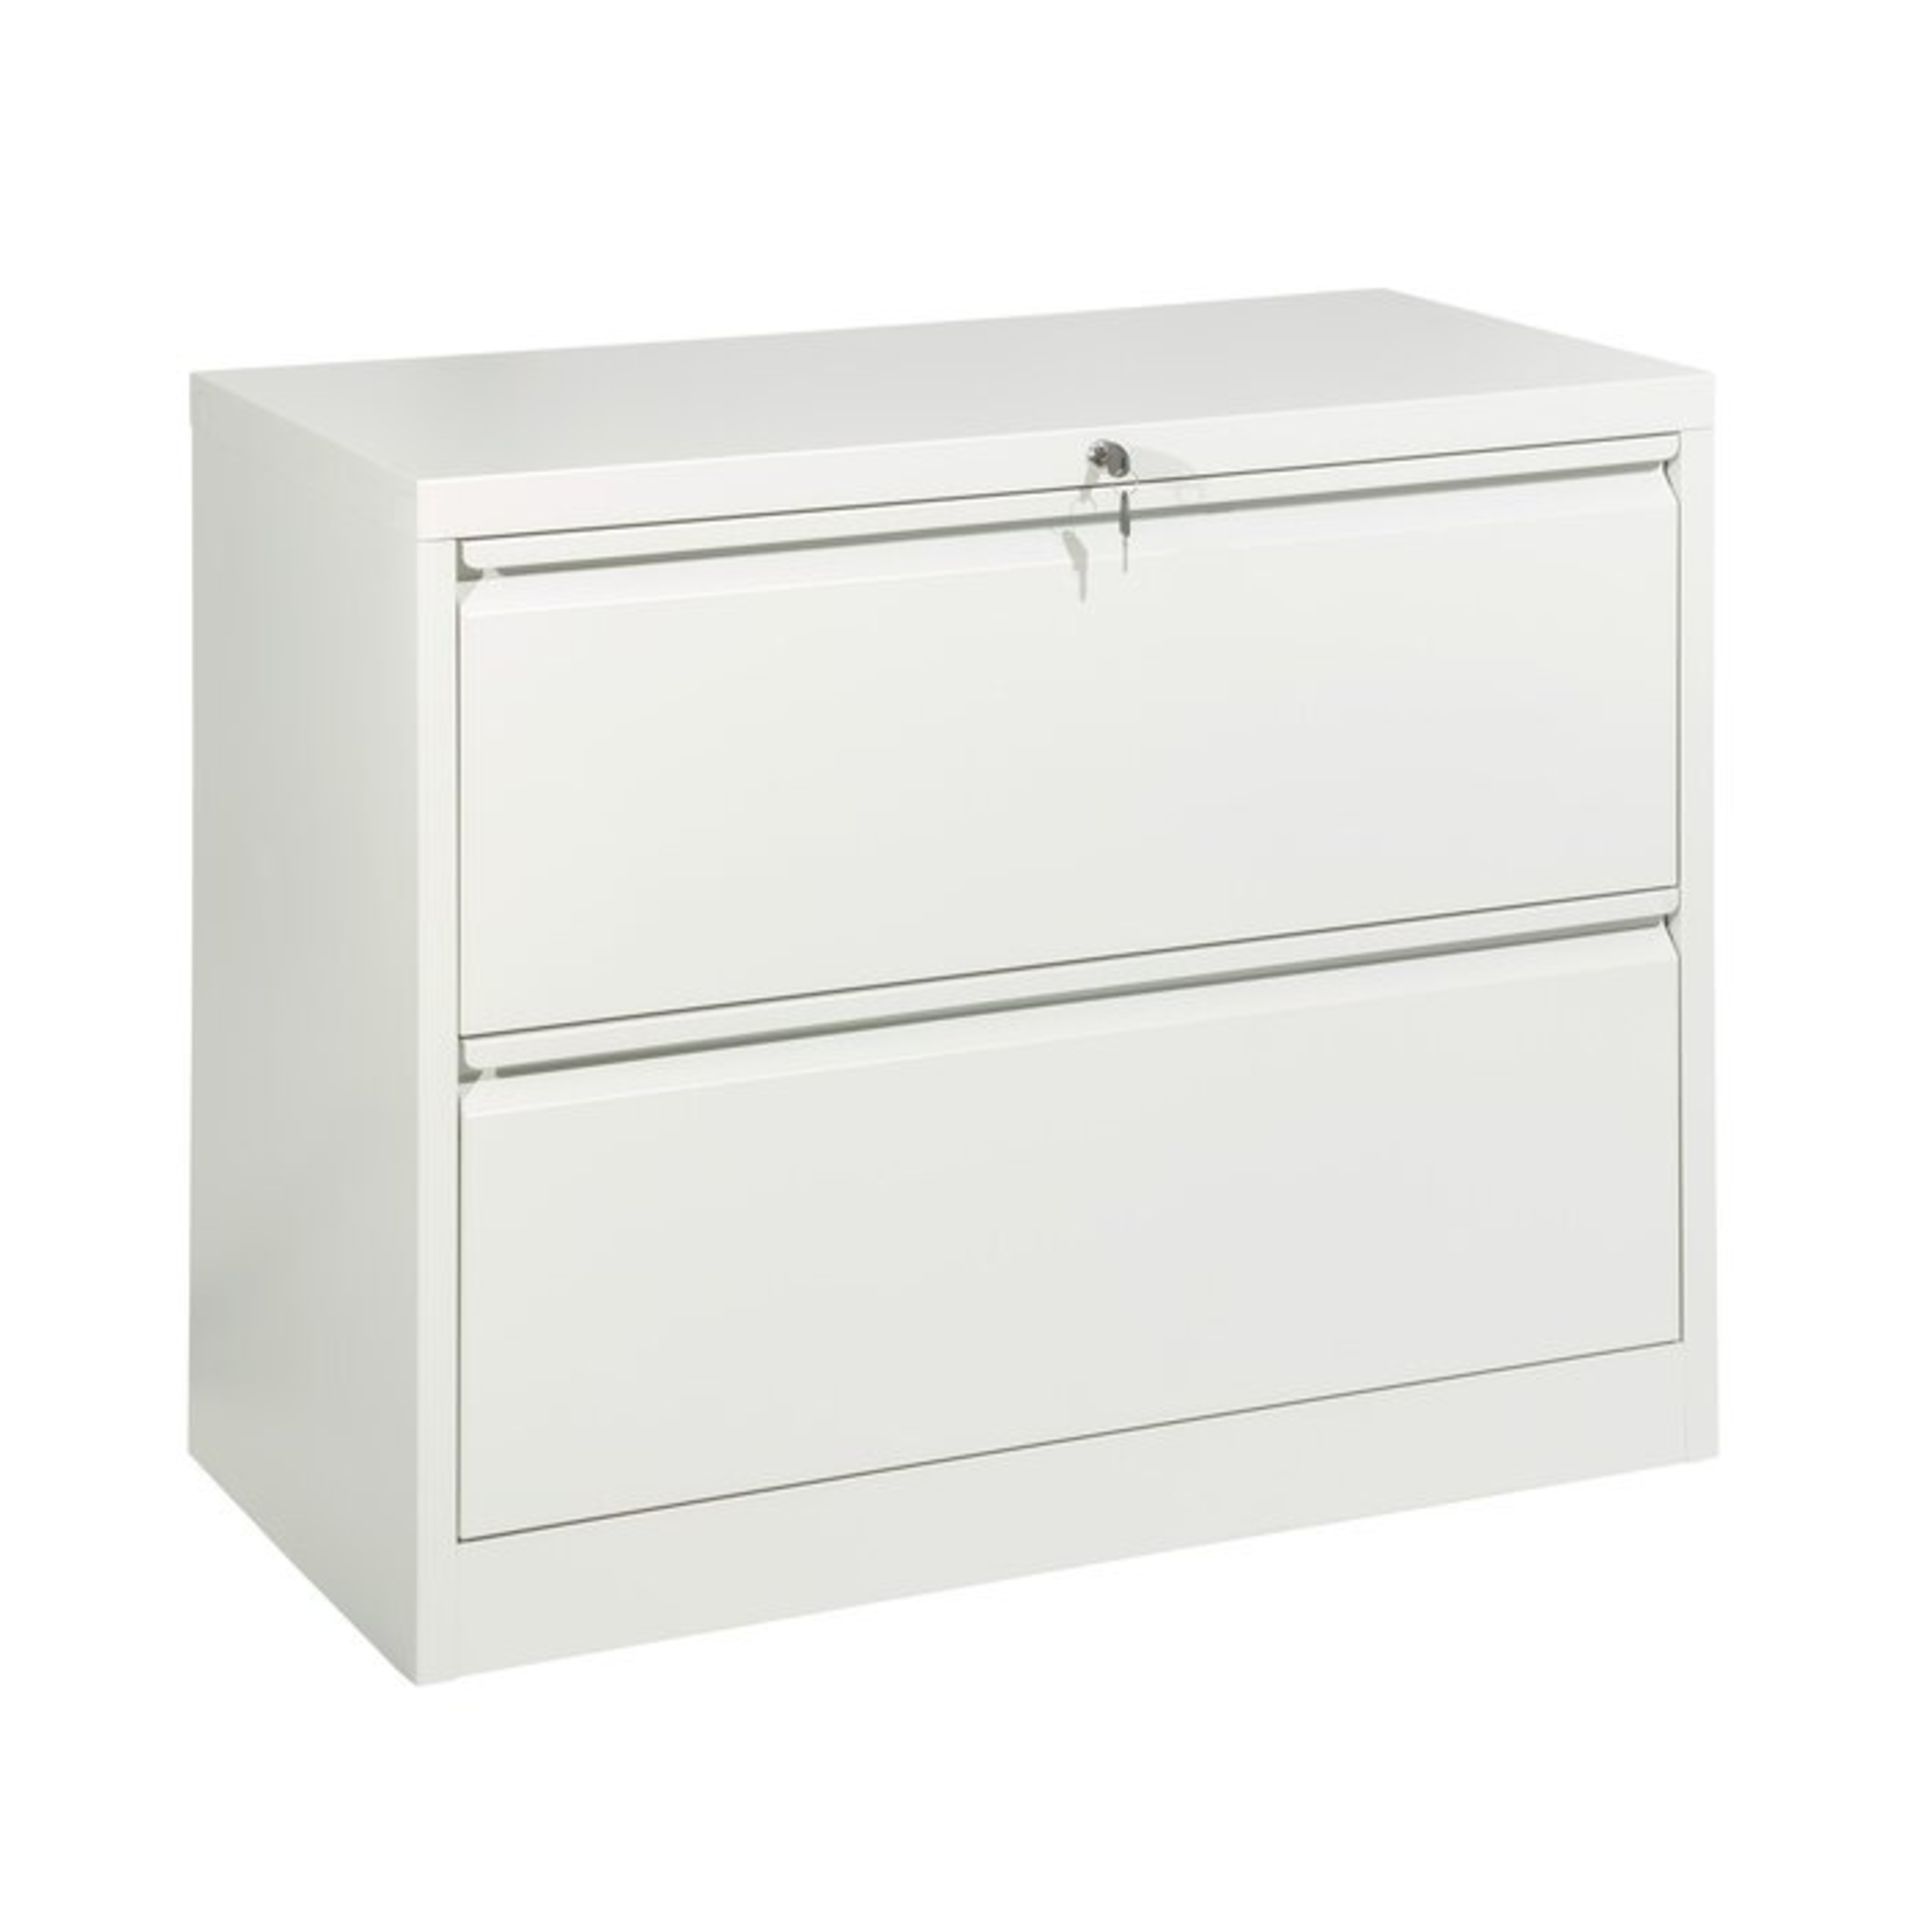 Danbury 2 Drawer Filing Cabinet - RRP £267.99 - Image 2 of 2